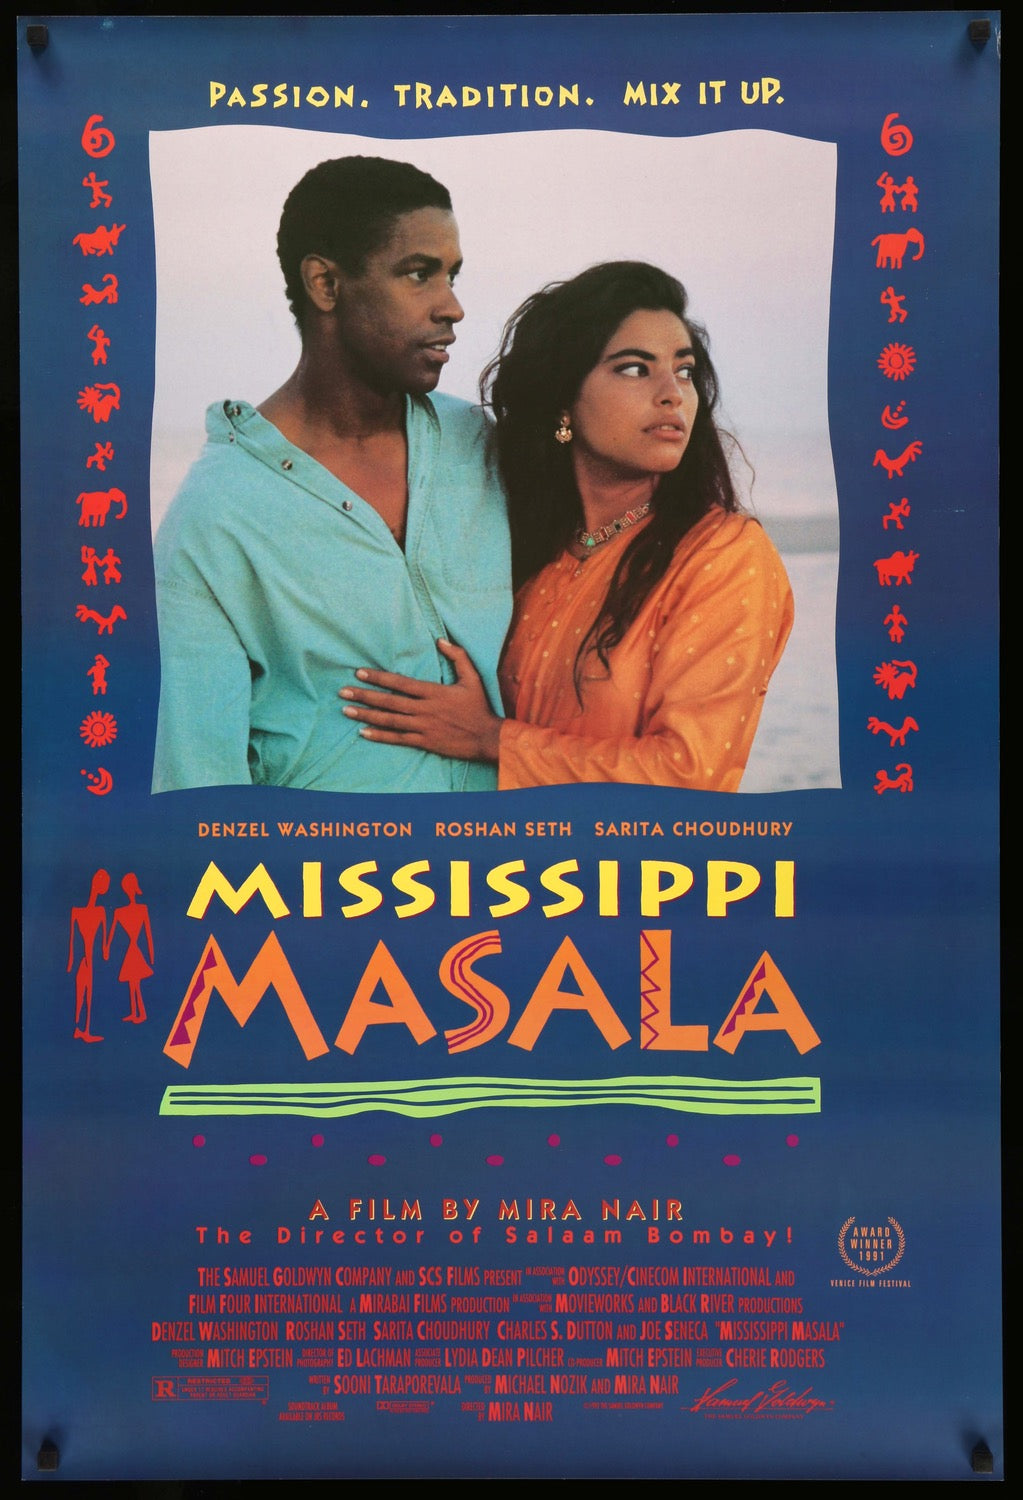 Mississippi Masala (1991) original movie poster for sale at Original Film Art